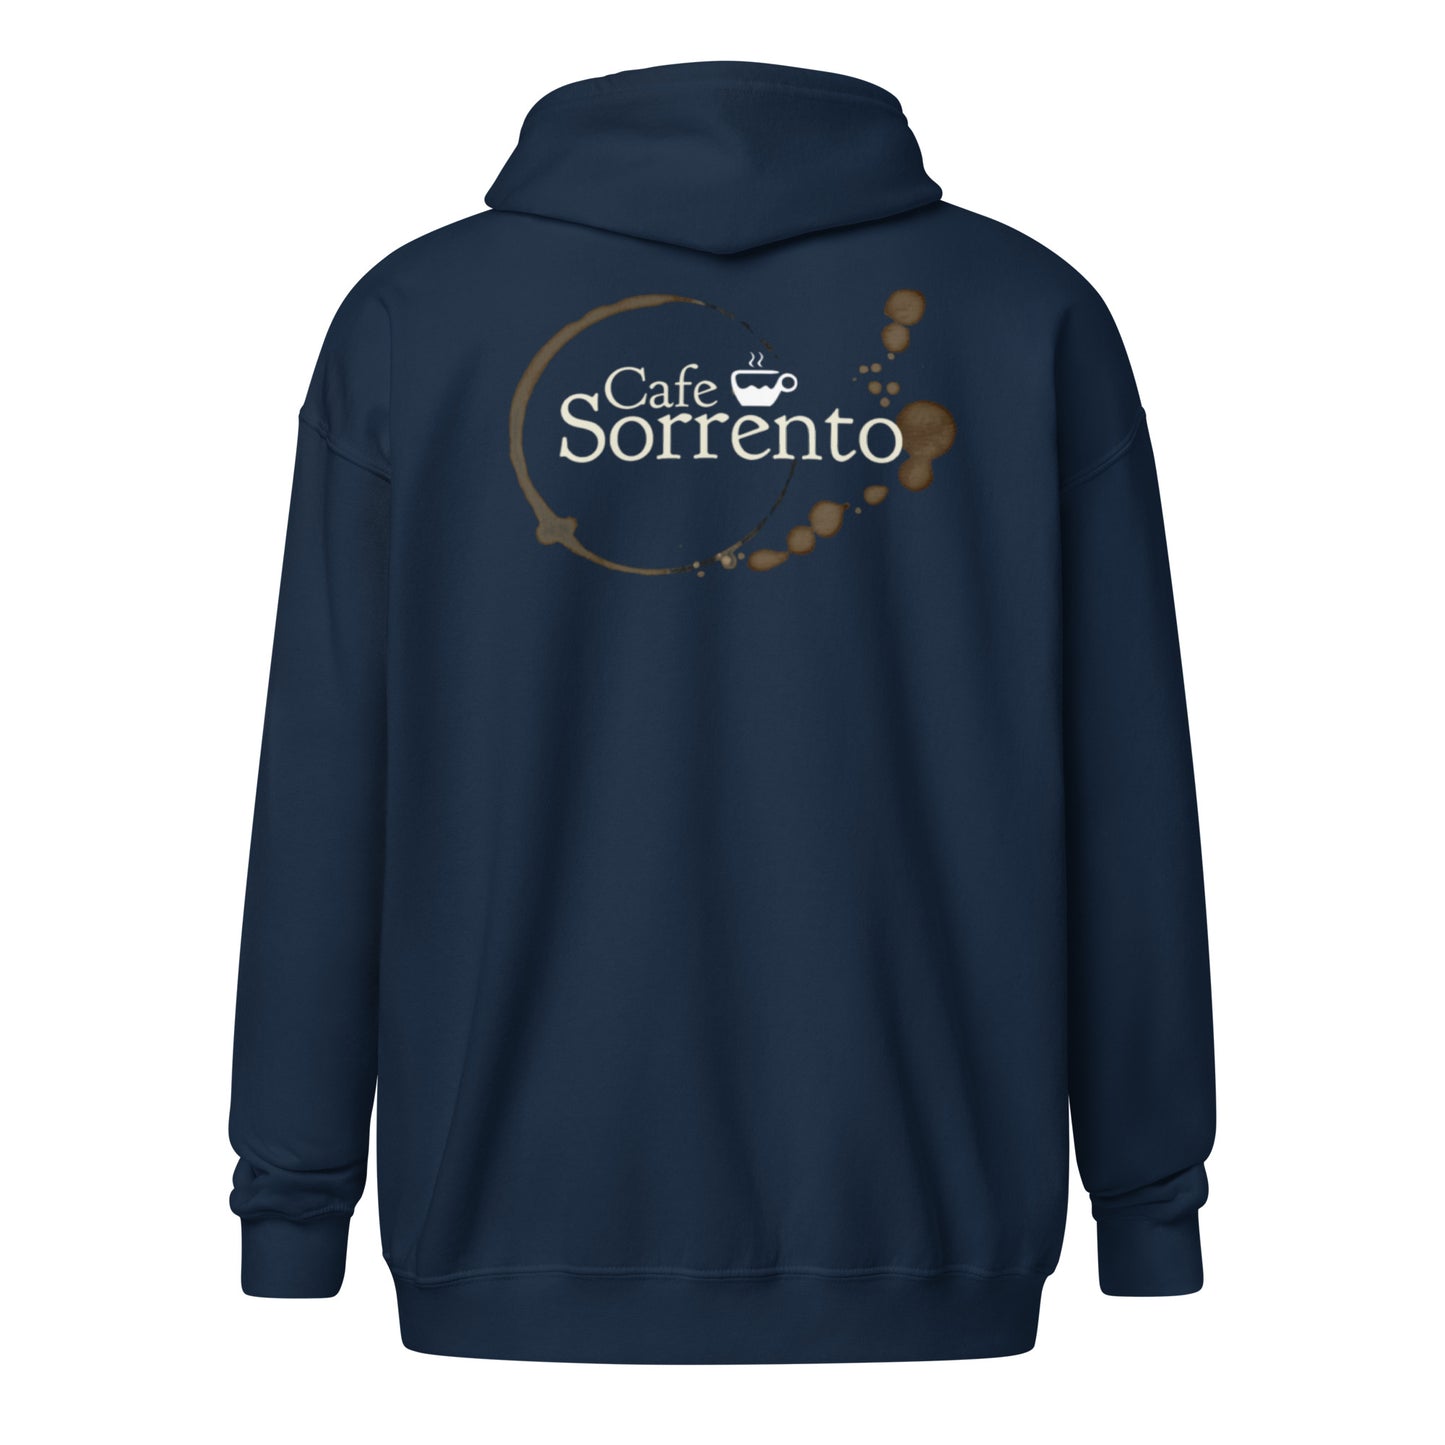 "Cafe Sorrento" huppari vetoketjulla (logo selässä + rinnassa)